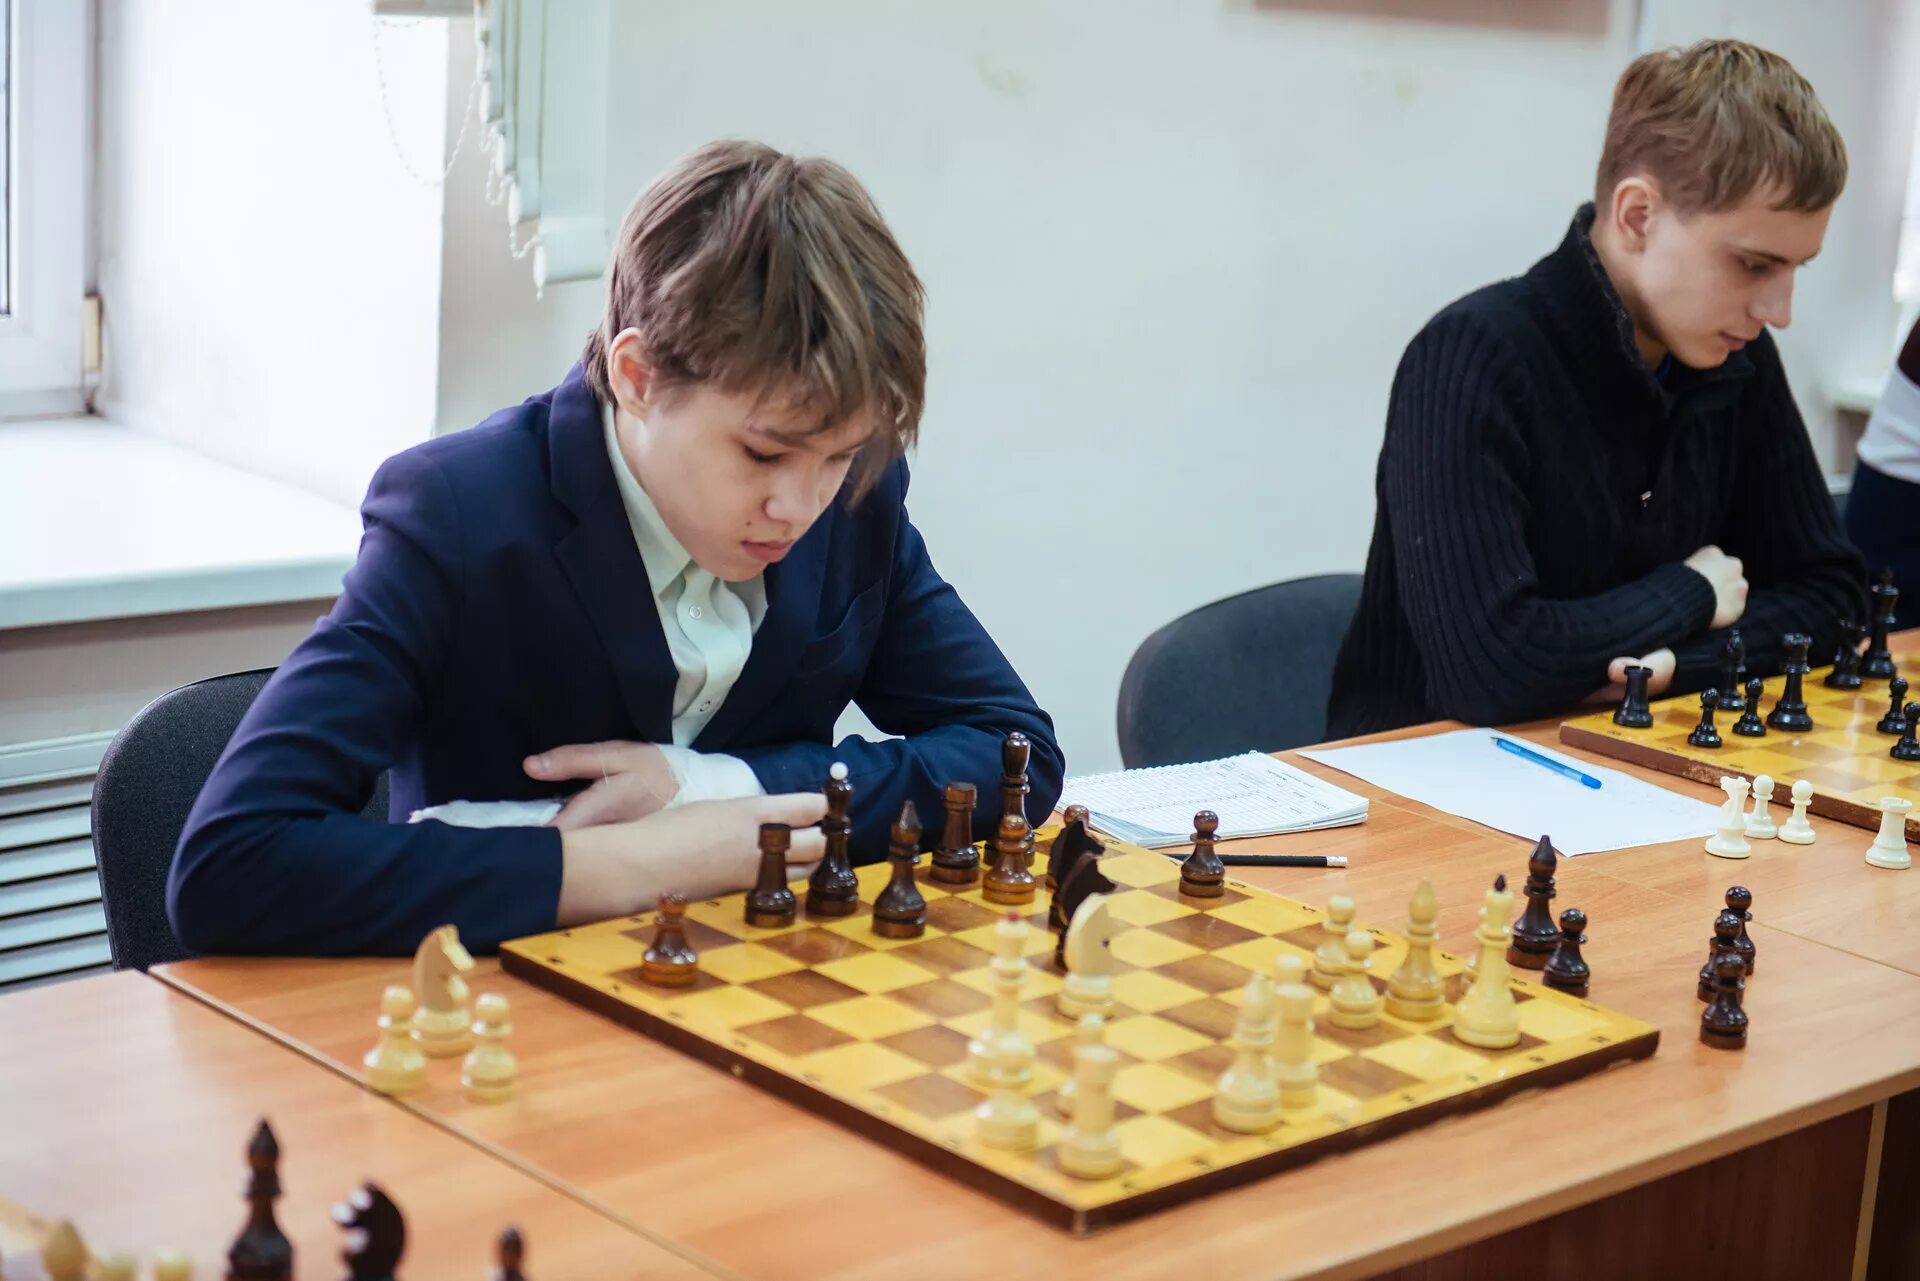 Играть в шахматы в шахматном клубе. Мусалов шахматы. Подросток шахматист. Шахматы "школьник". Школьники играют в шахматы.